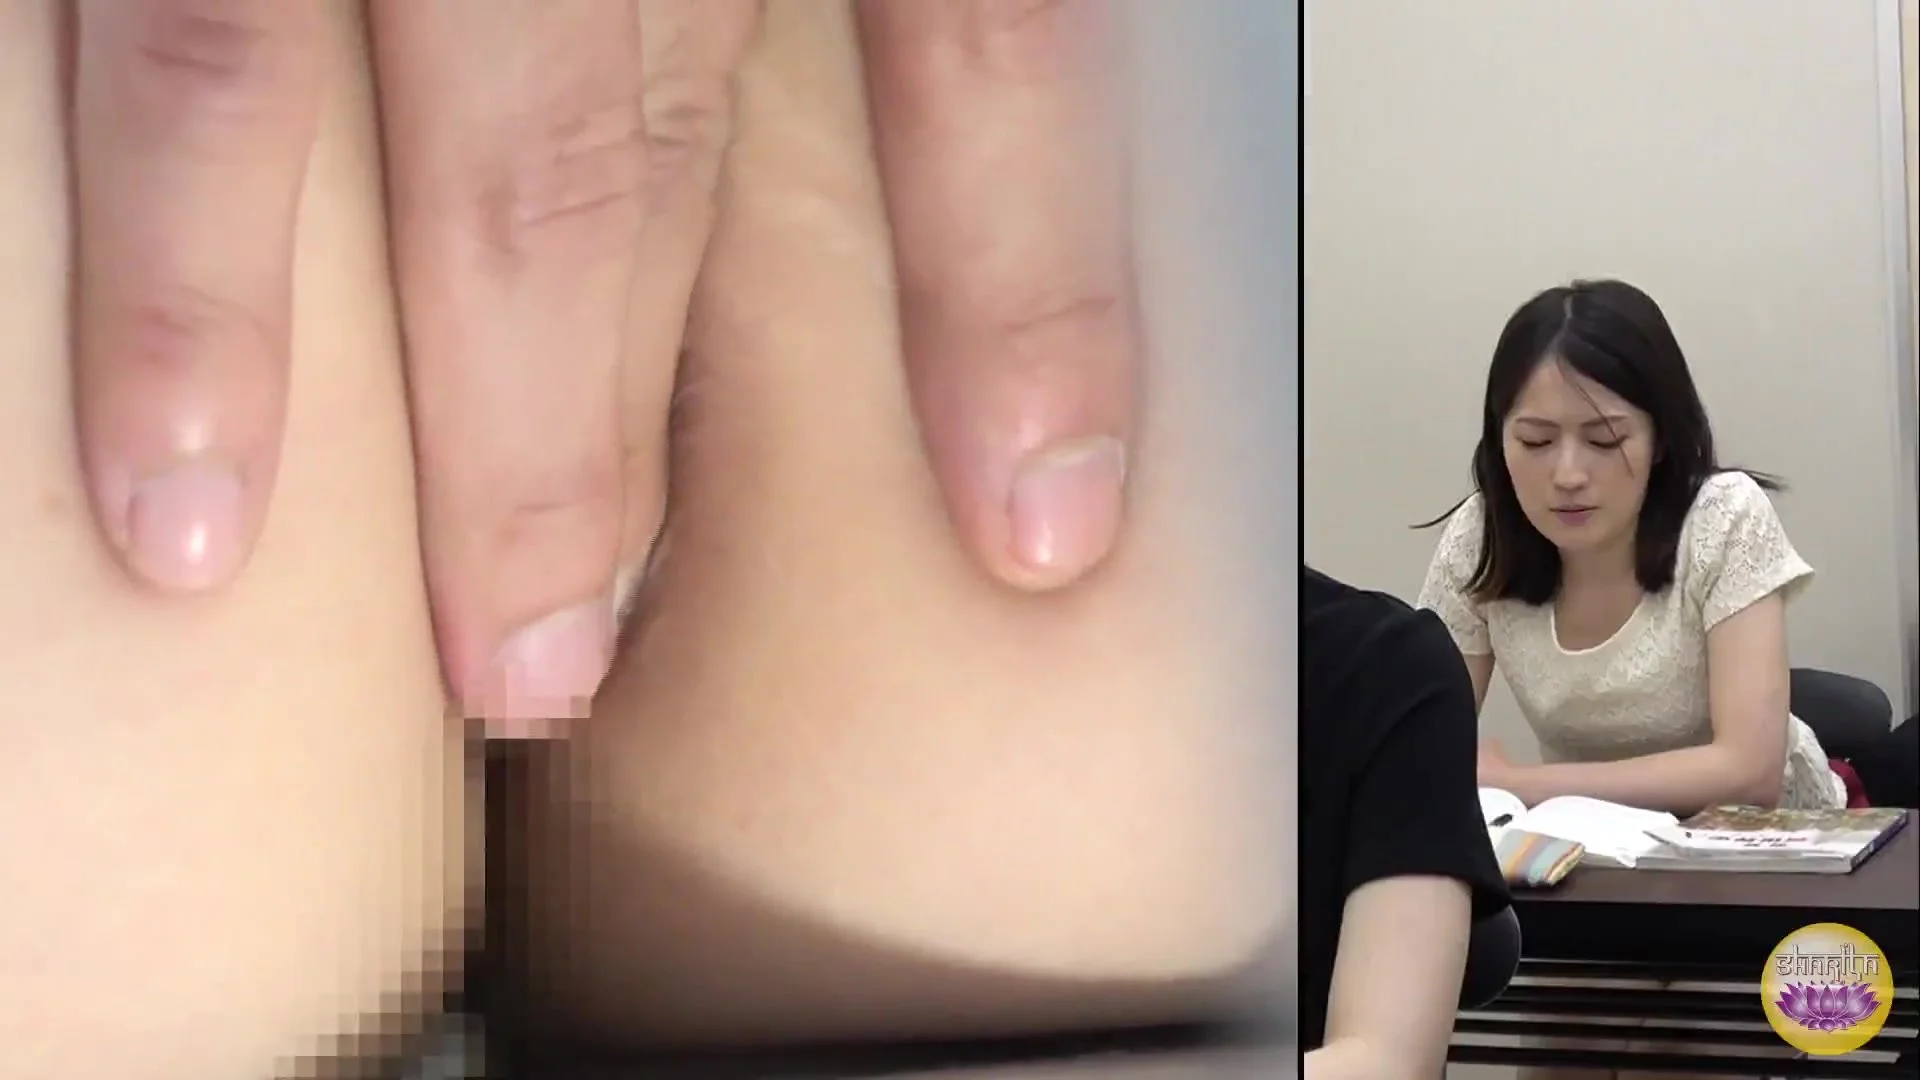 Anal Finger Video